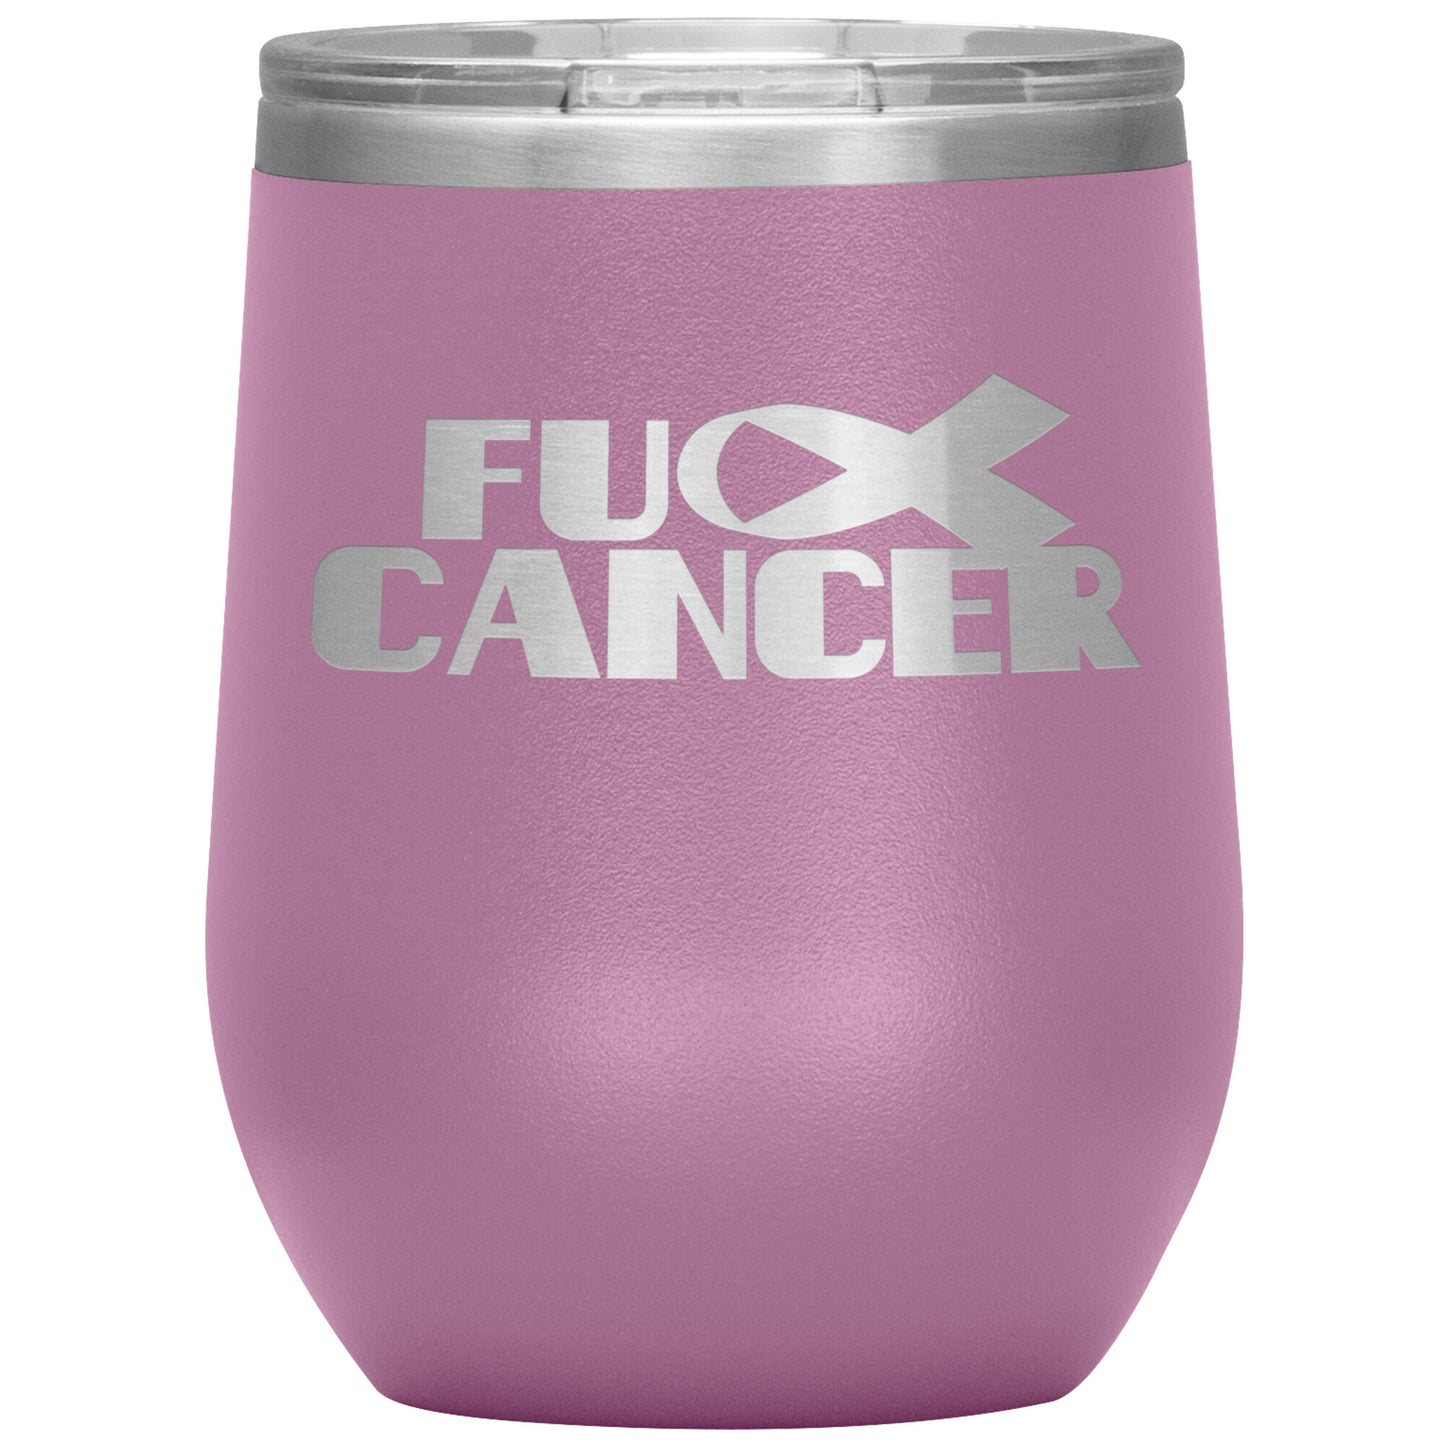 Fu** Cancer 12oz Wine Insulated Tumbler